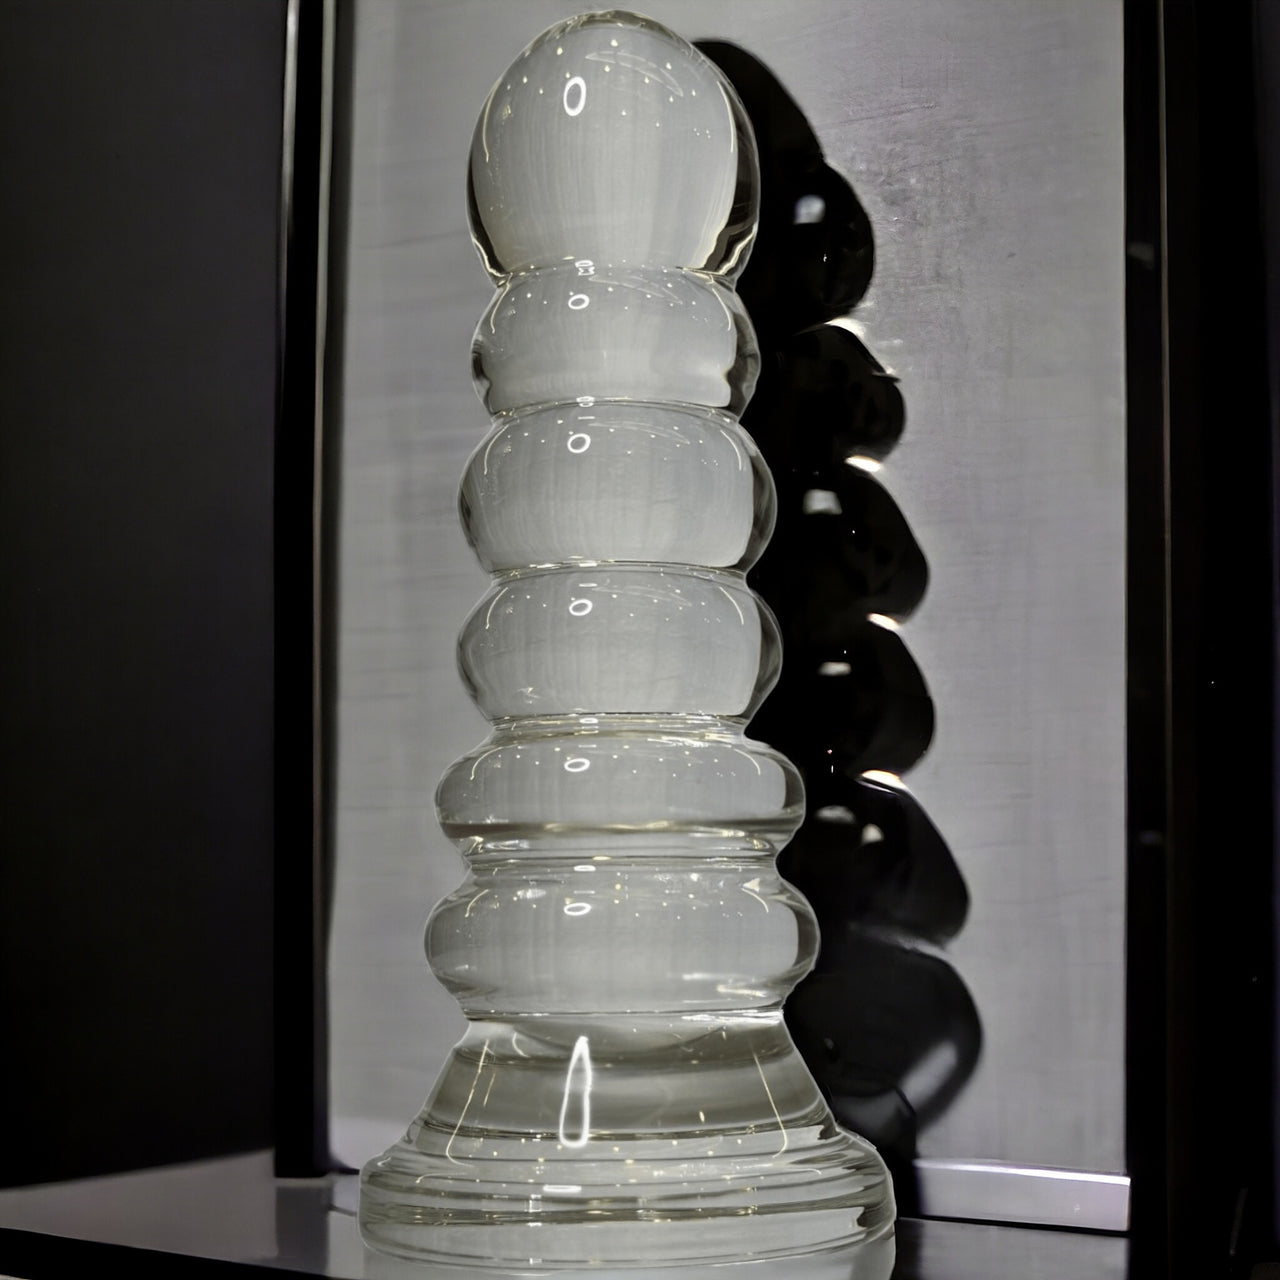 Elegant Solid Glass Phallic Decorative Sculpture a 1.3 Pound Versatile Art Piece with Erotic Appeal